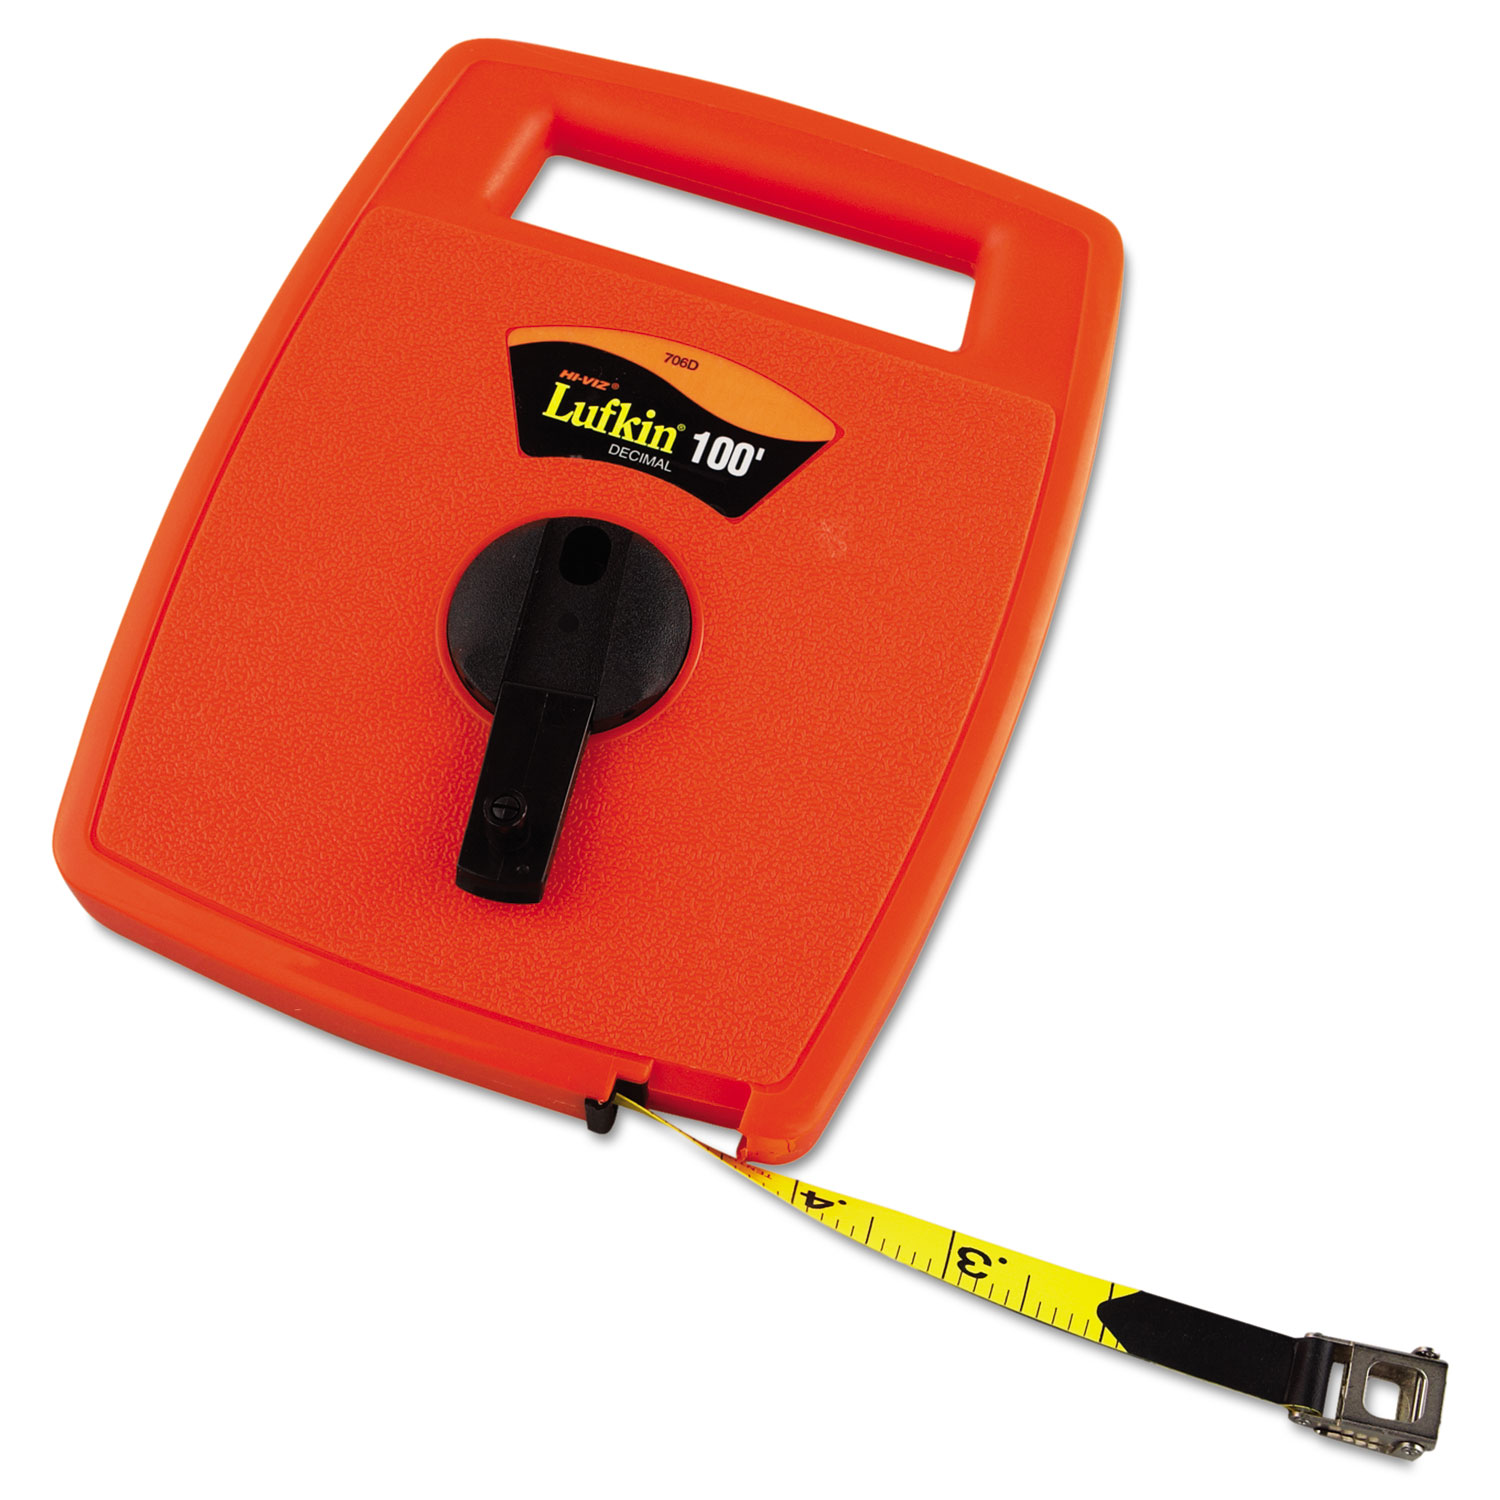  Lufkin 706D Hi-Viz Linear Measuring Tape Measure, 1/2in x 100ft, Orange, Fiberglass Tape (LUF706D) 